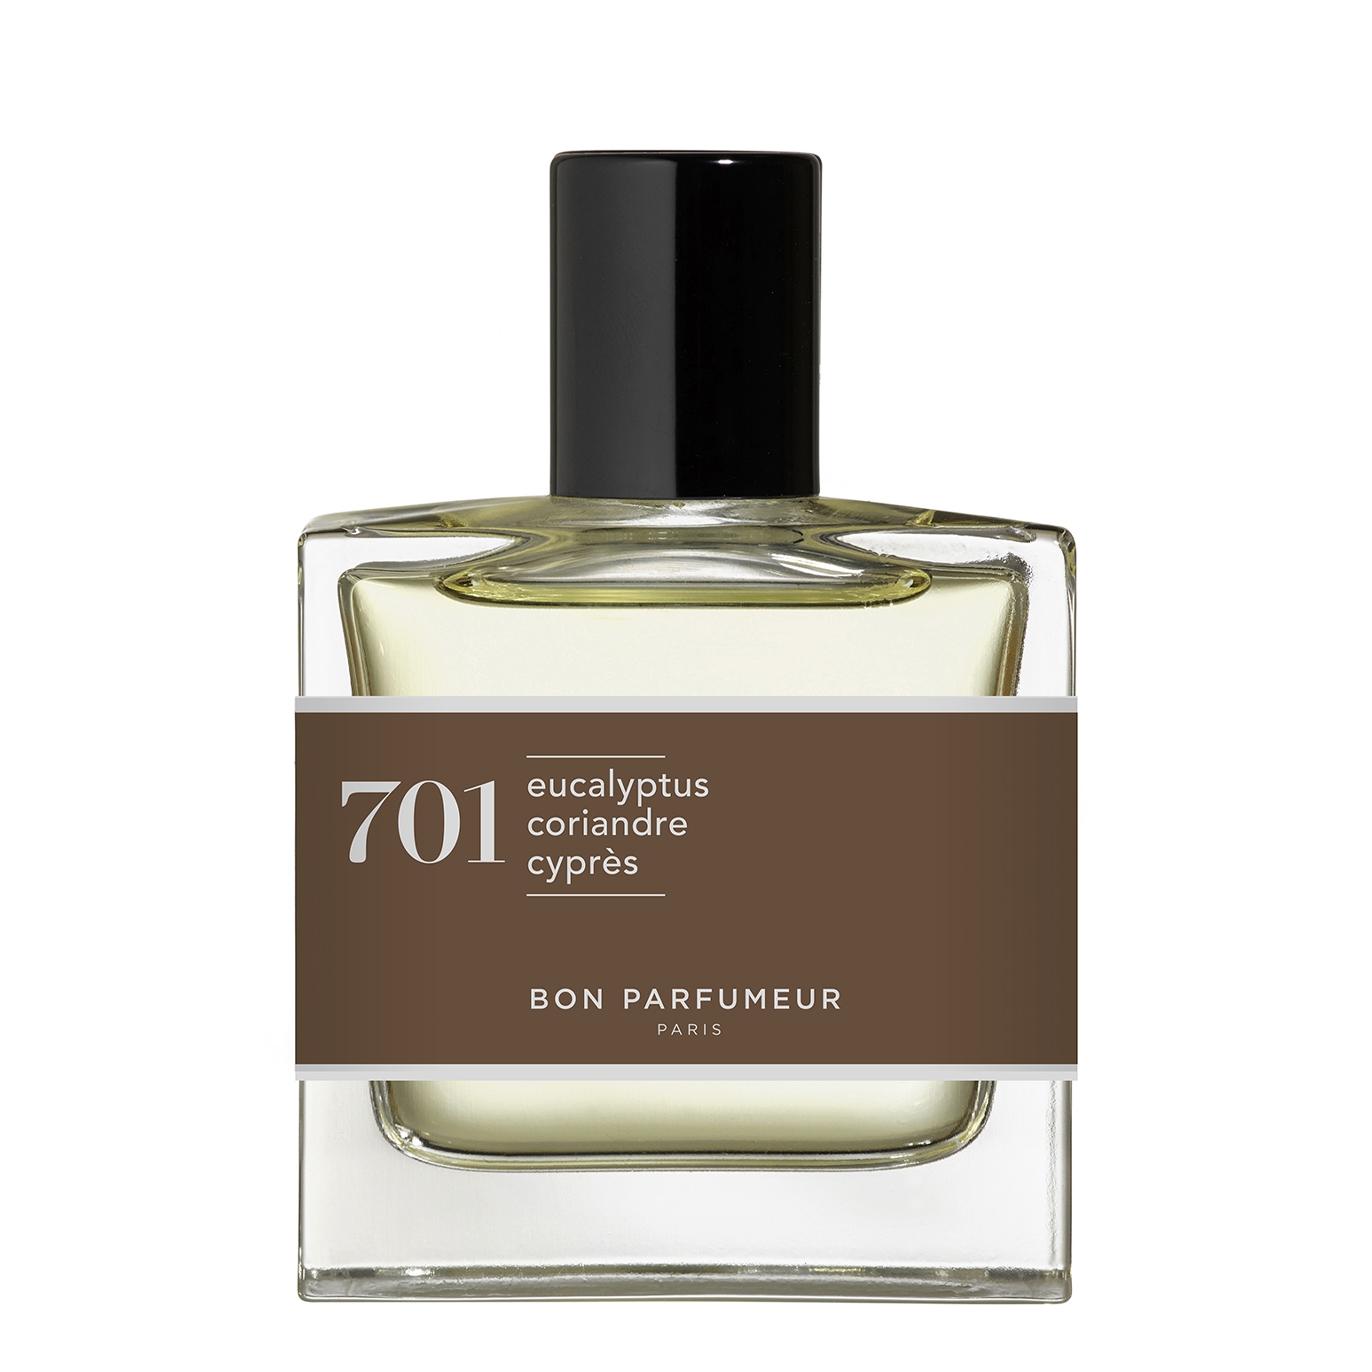 Bon Parfumeur 701 Eucalyptus Coriander Cypress Eau De Parfum 30ml